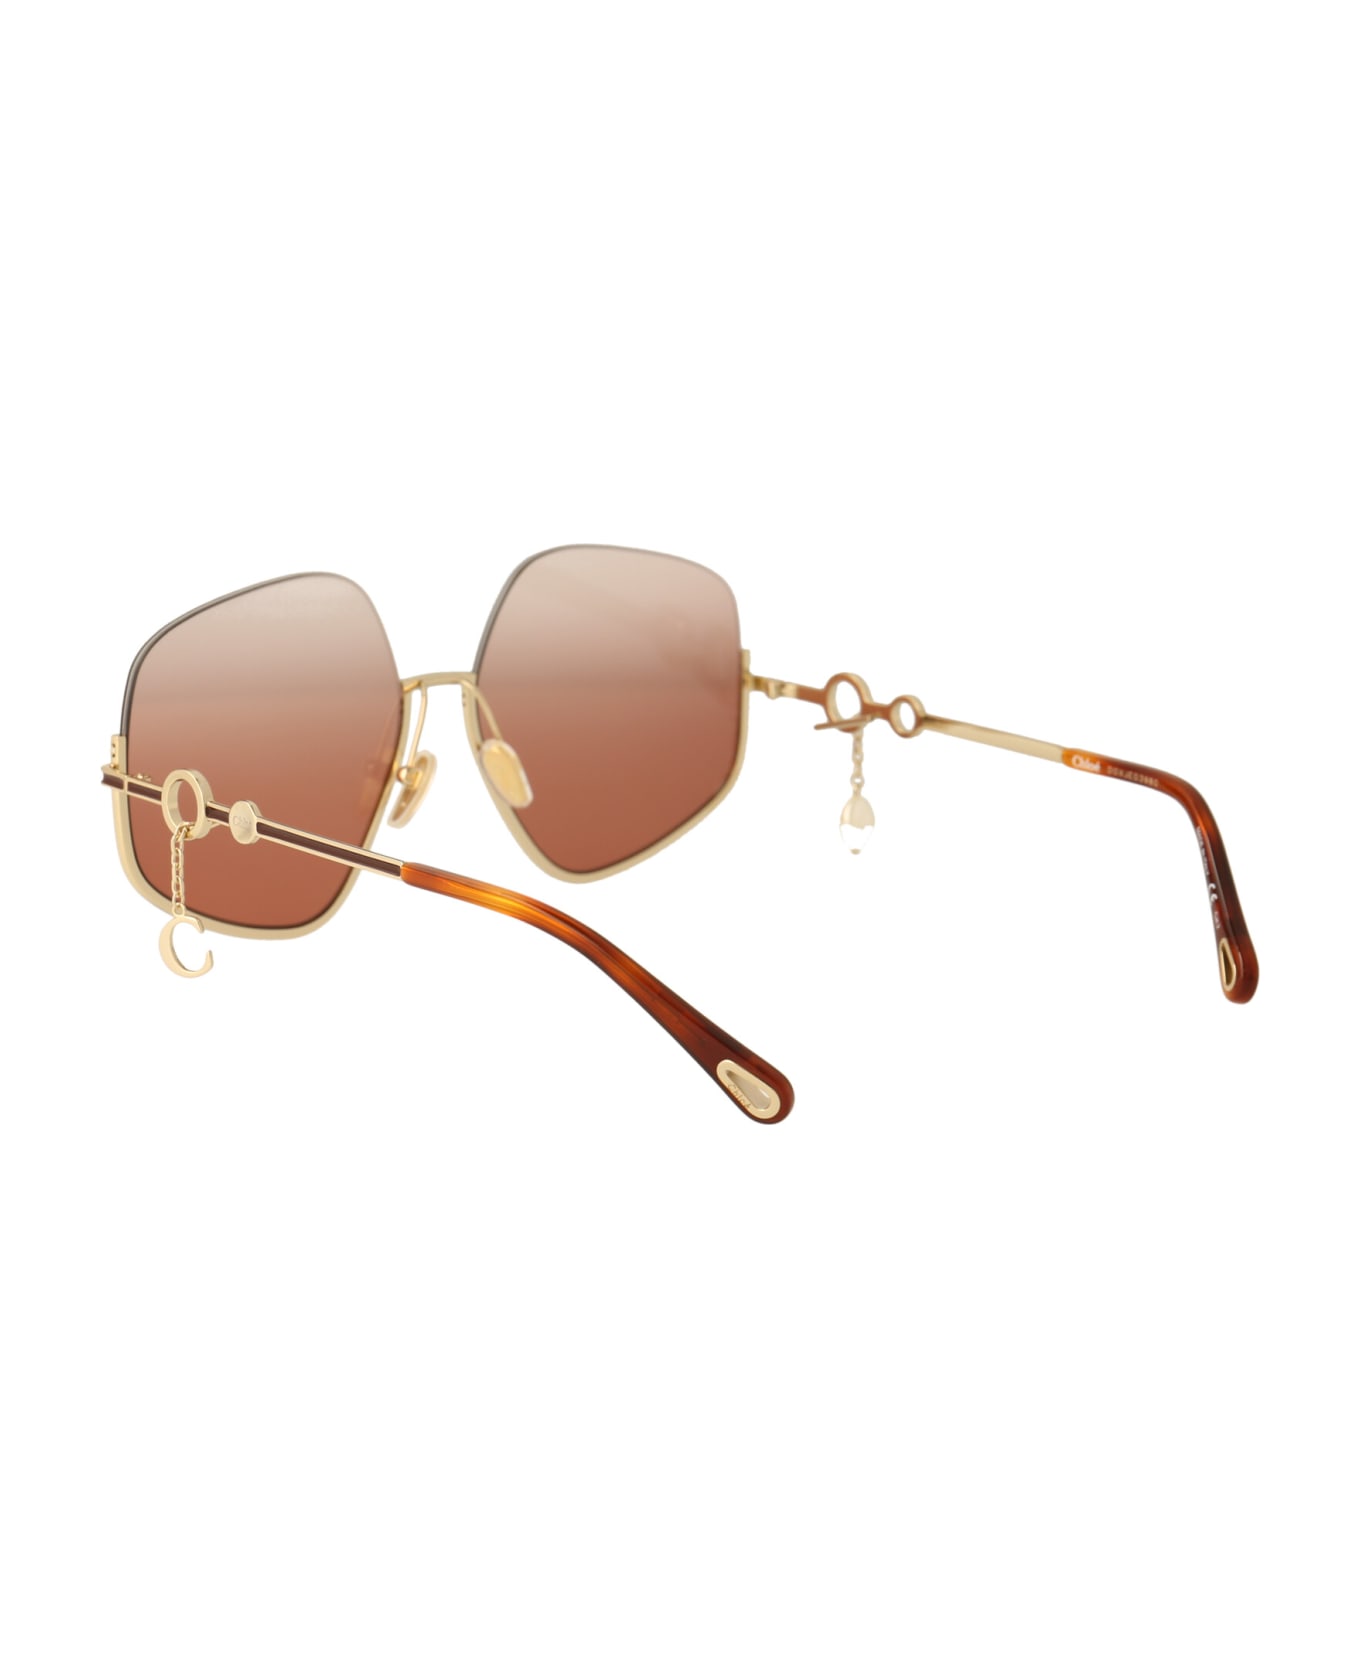 Chloé Eyewear Ch0068s Sunglasses - 002 GOLD GOLD ORANGE サングラス